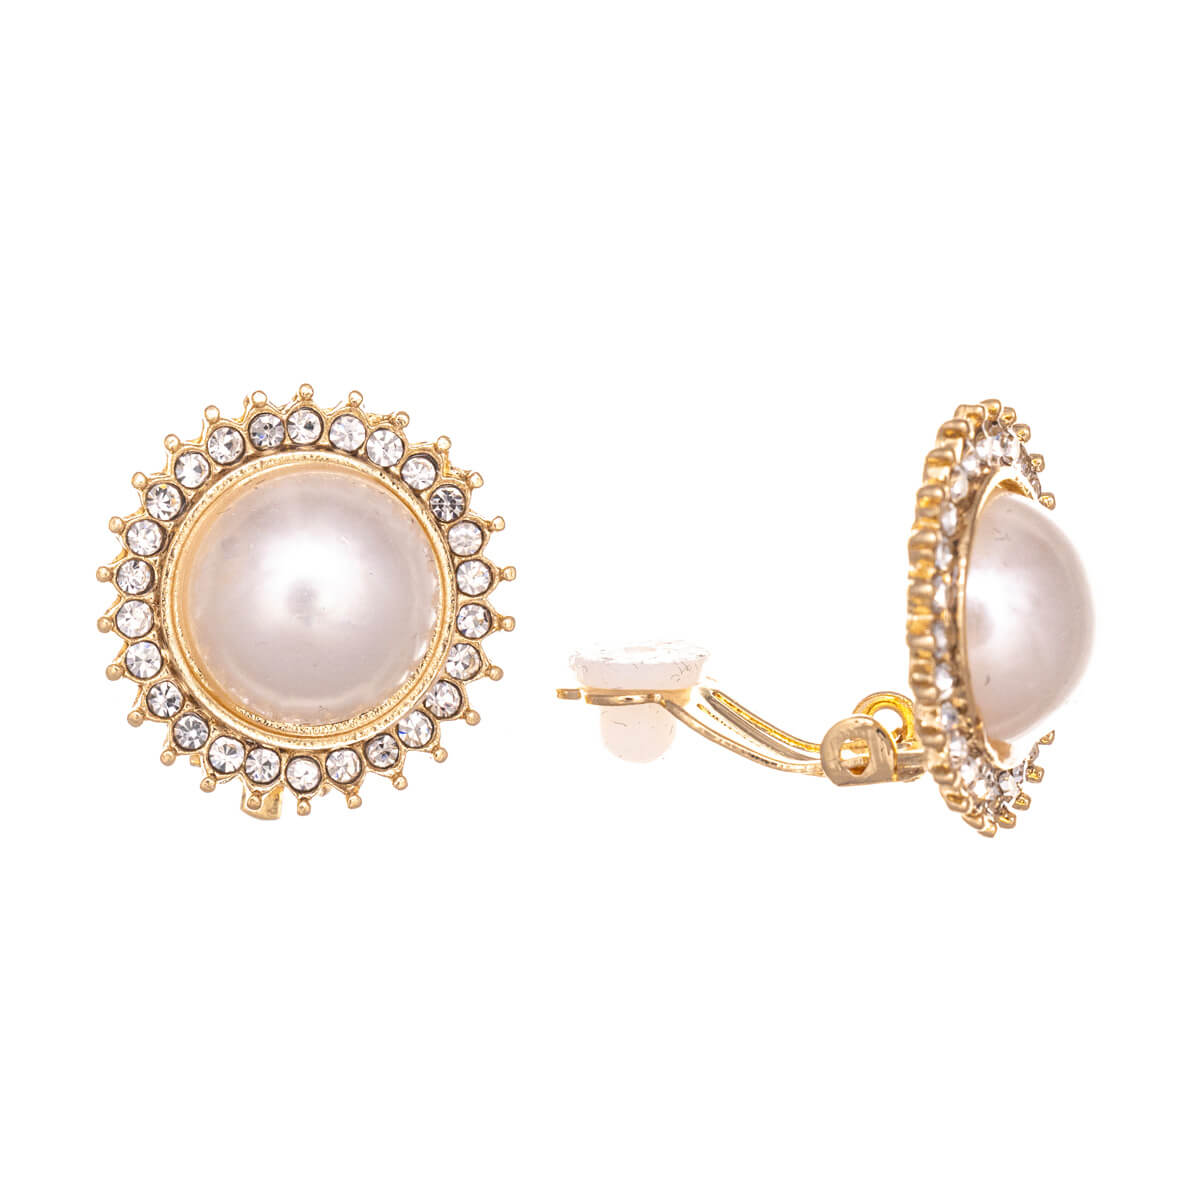 Round pearl rhinestone clip earrings